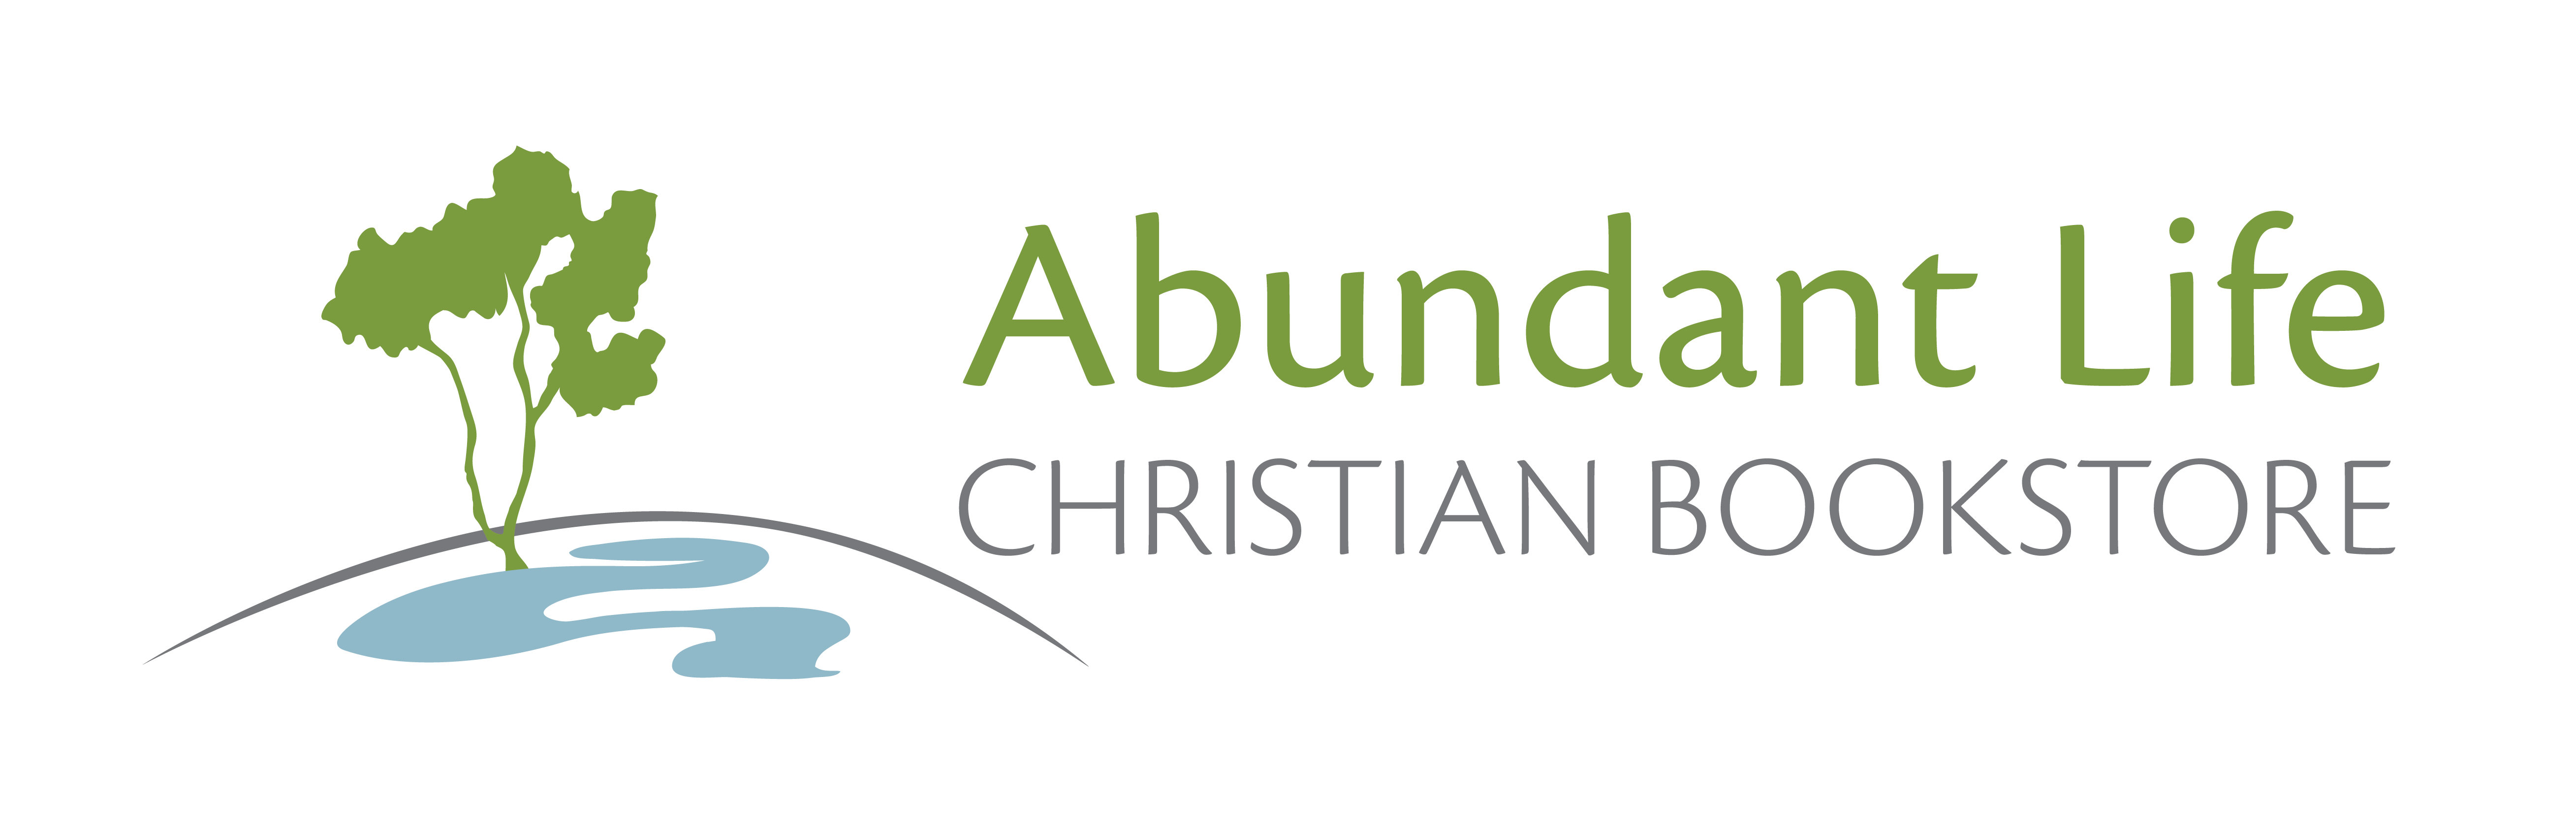 Abundant Life Christian Bookstore - A Ministry of Good Shepherd Baptist Church